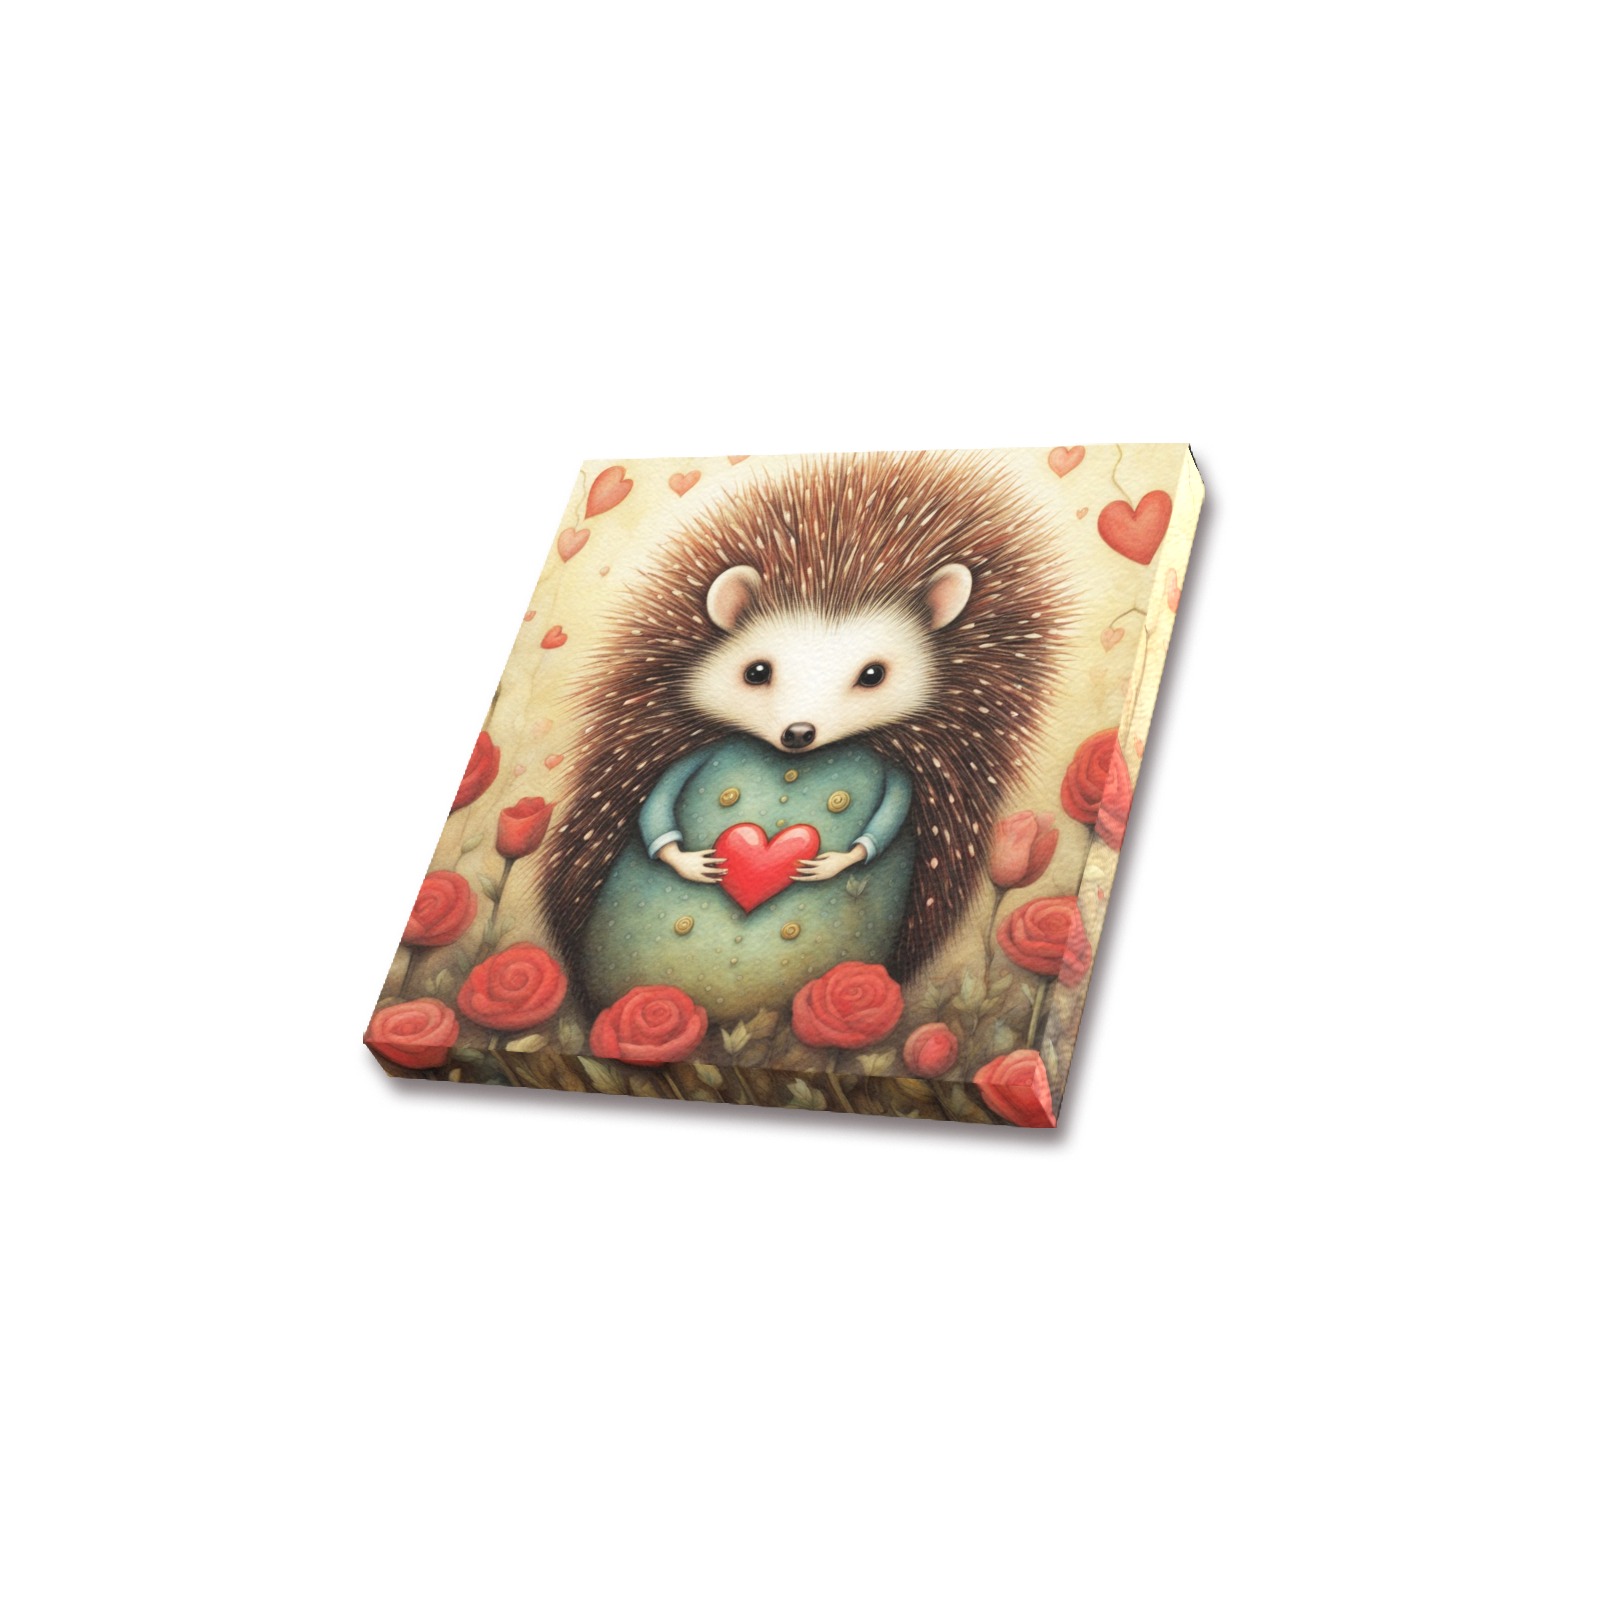 Hedgehog Love 2 Upgraded Canvas Print 12"x12"